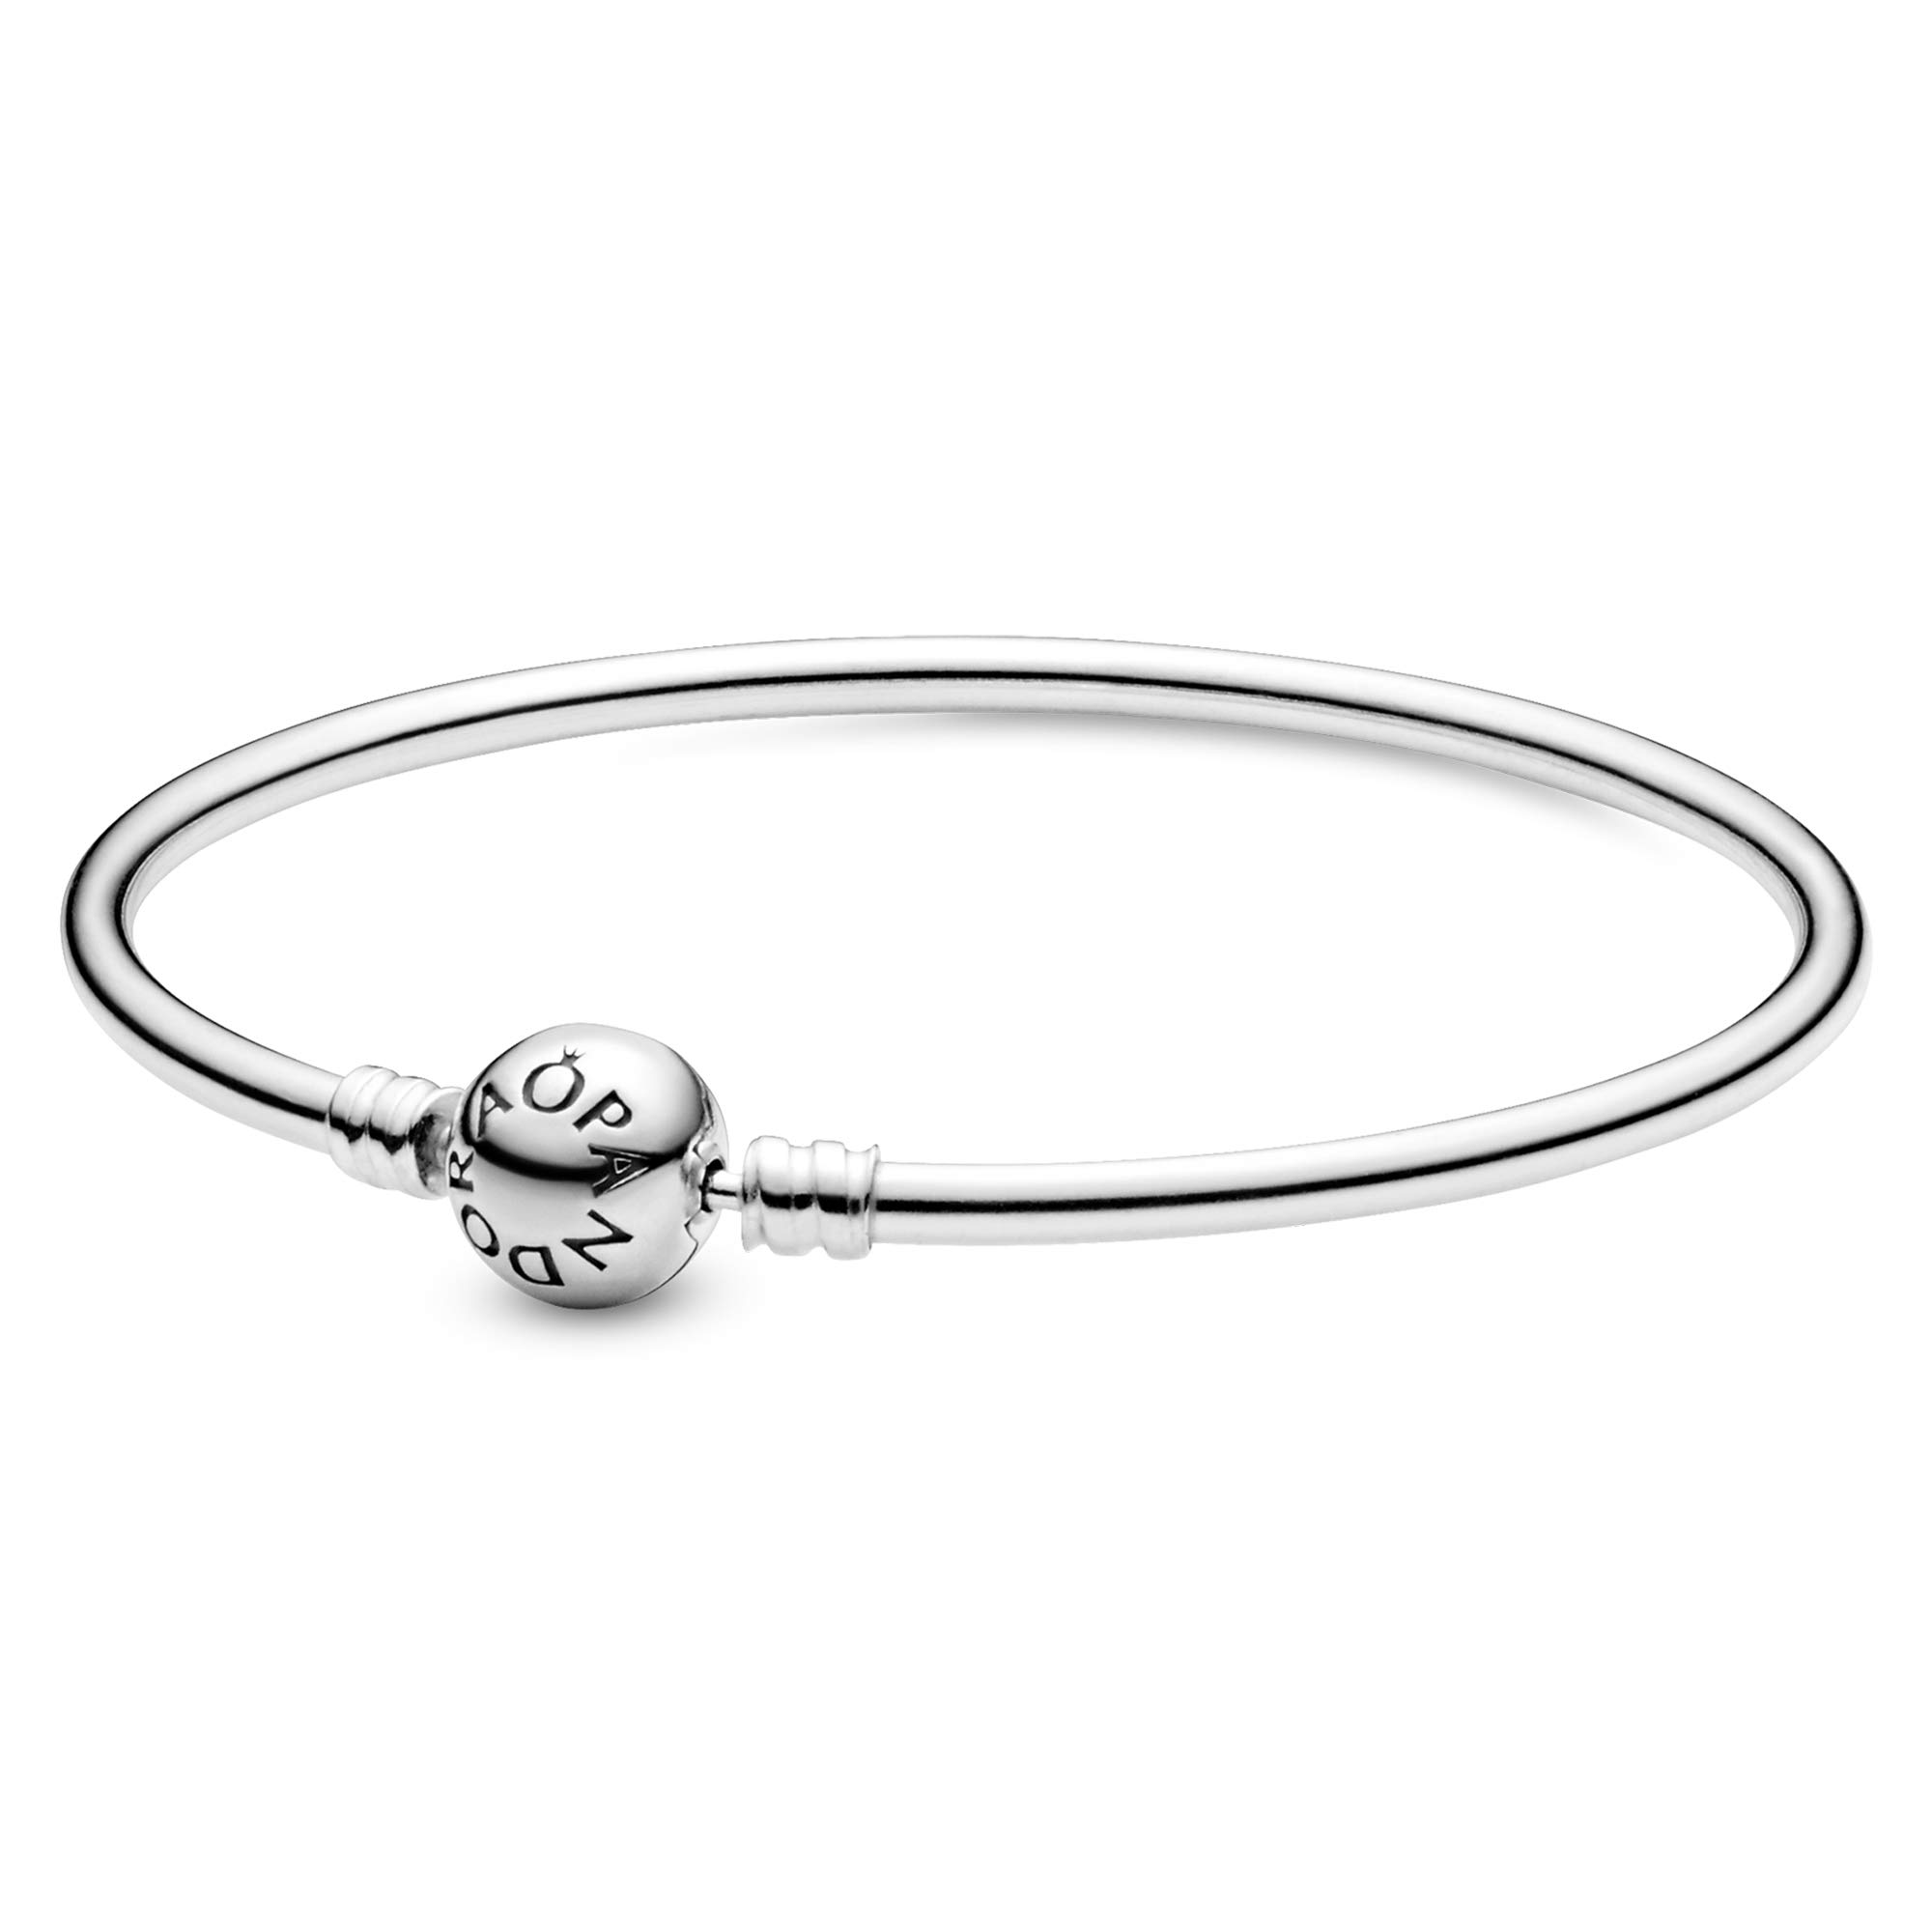 Who still has a @Pandora bracelet?✨ #jewelry #pandora #pandorabracelet... |  jelline brands | TikTok